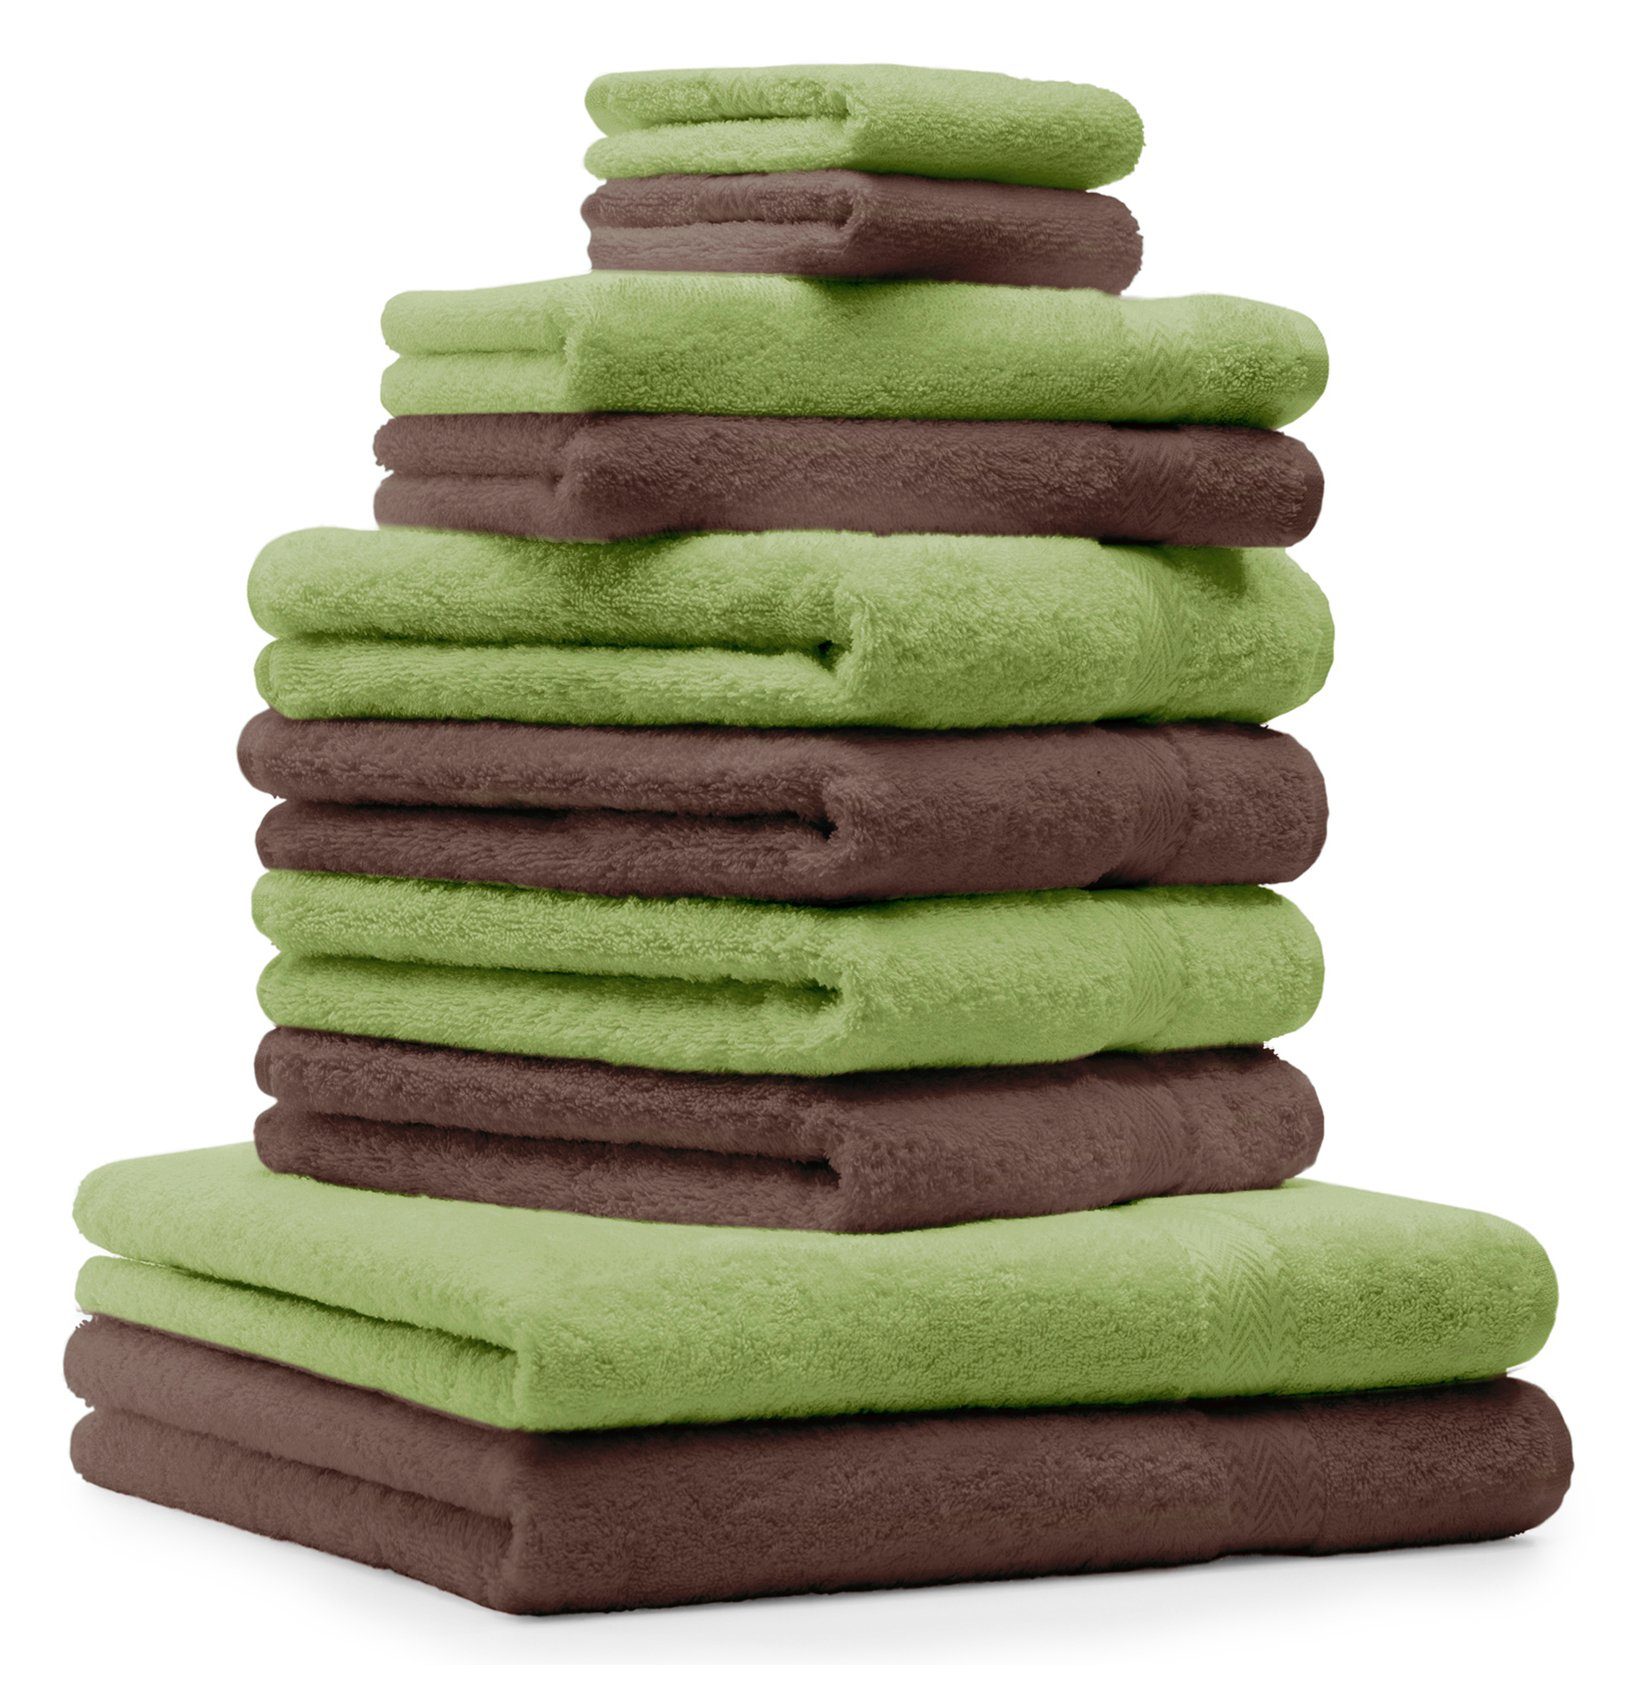 Betz Handtuch Set 10-TLG. Handtuch-Set Premium 100% Baumwolle 2 Duschtücher 4 Handtücher 2 Gästetücher 2 Waschhandschuhe Farbe Apfel Grün & Nuss Braun, 100% Baumwolle, (Set, 10-tlg)